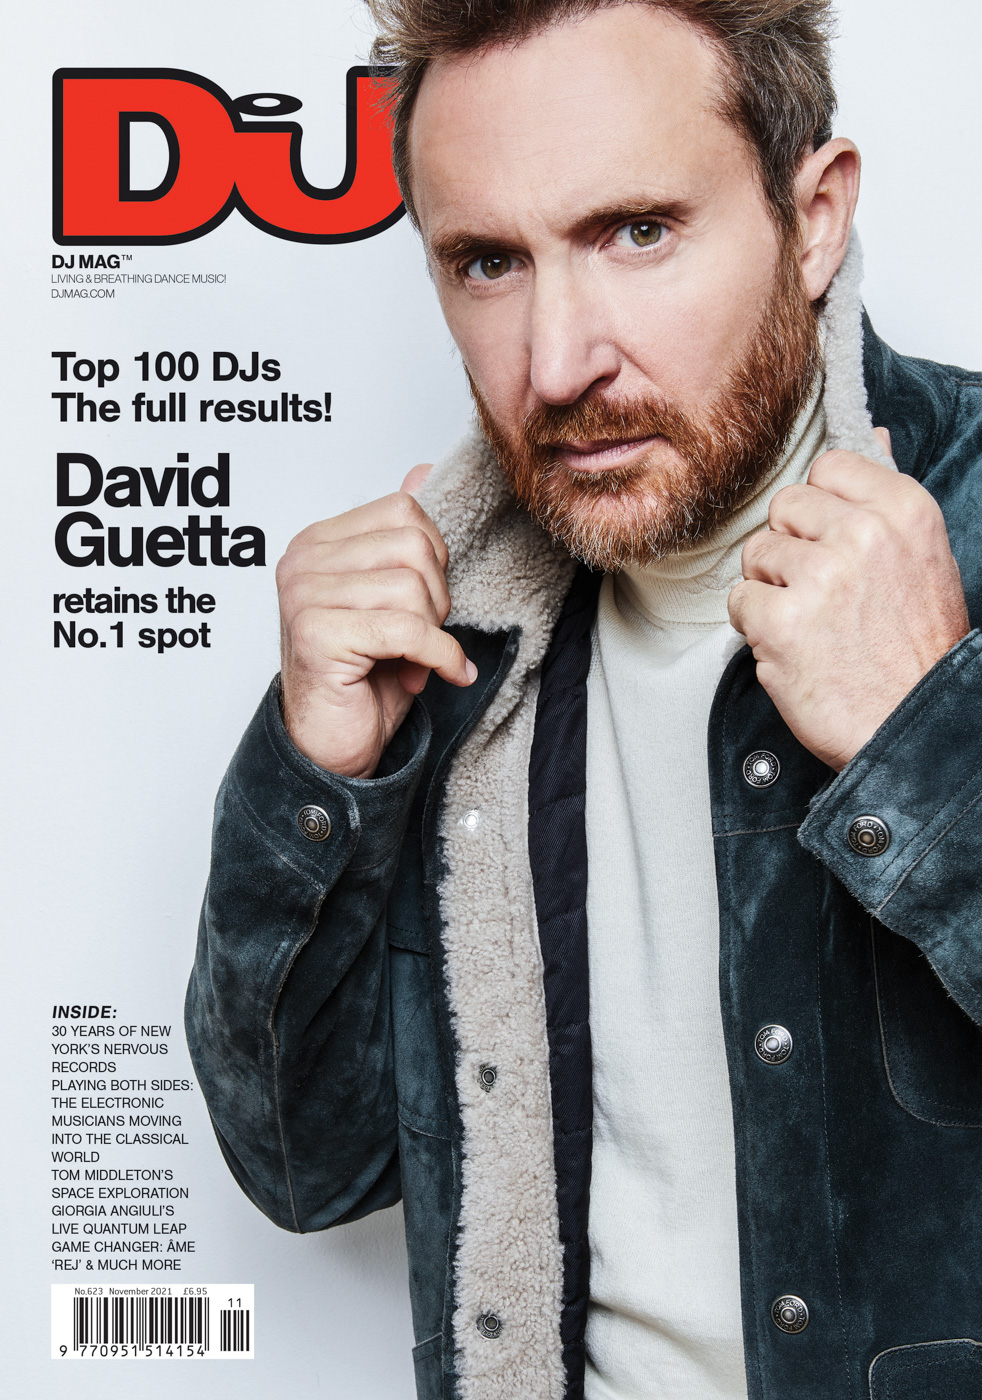 DJ Mag - Top 100 Winners Cover - David Guetta